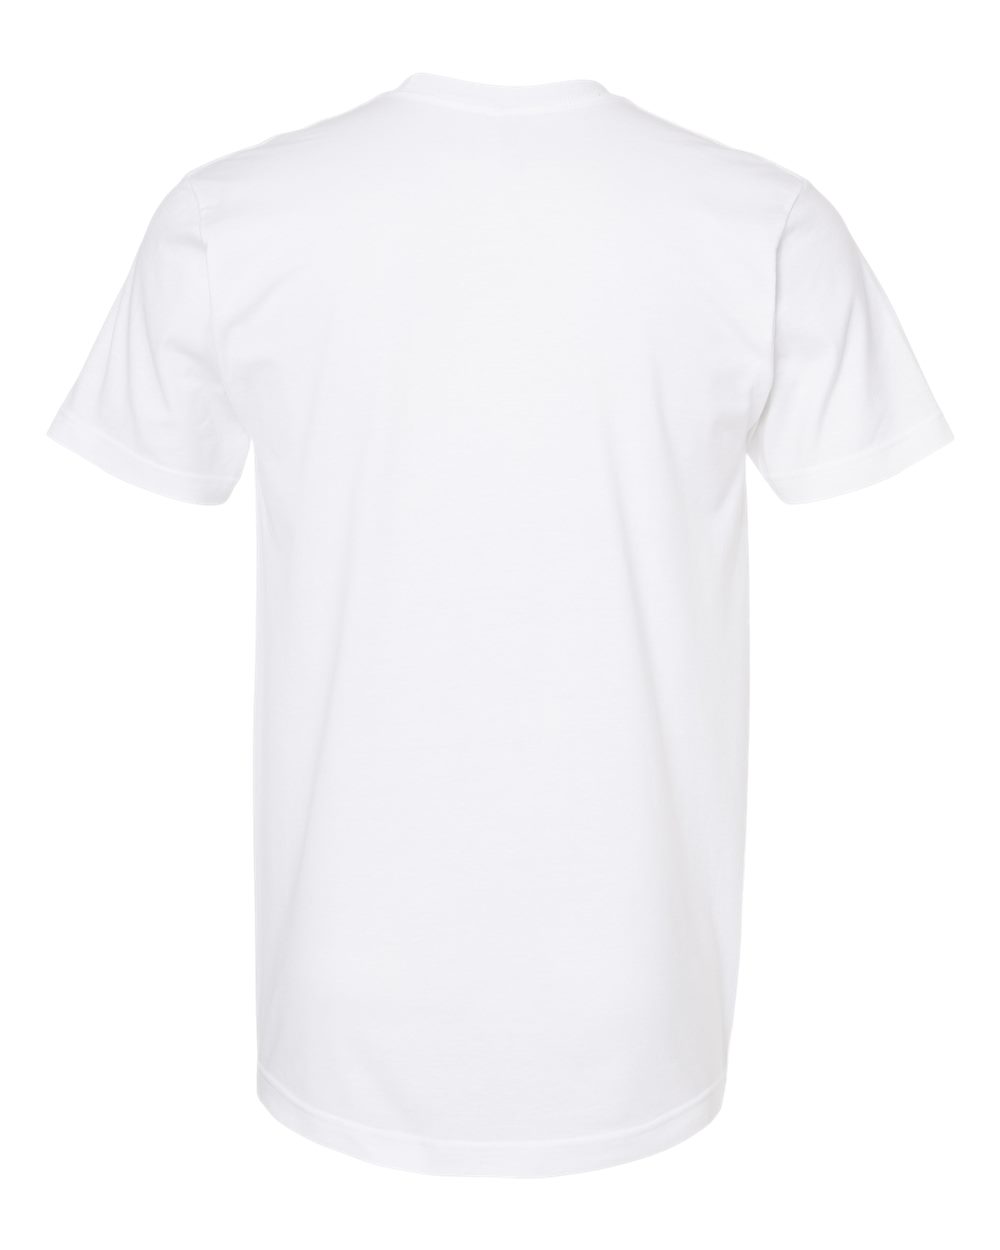 White Unisex Adult Cotton T-Shirt